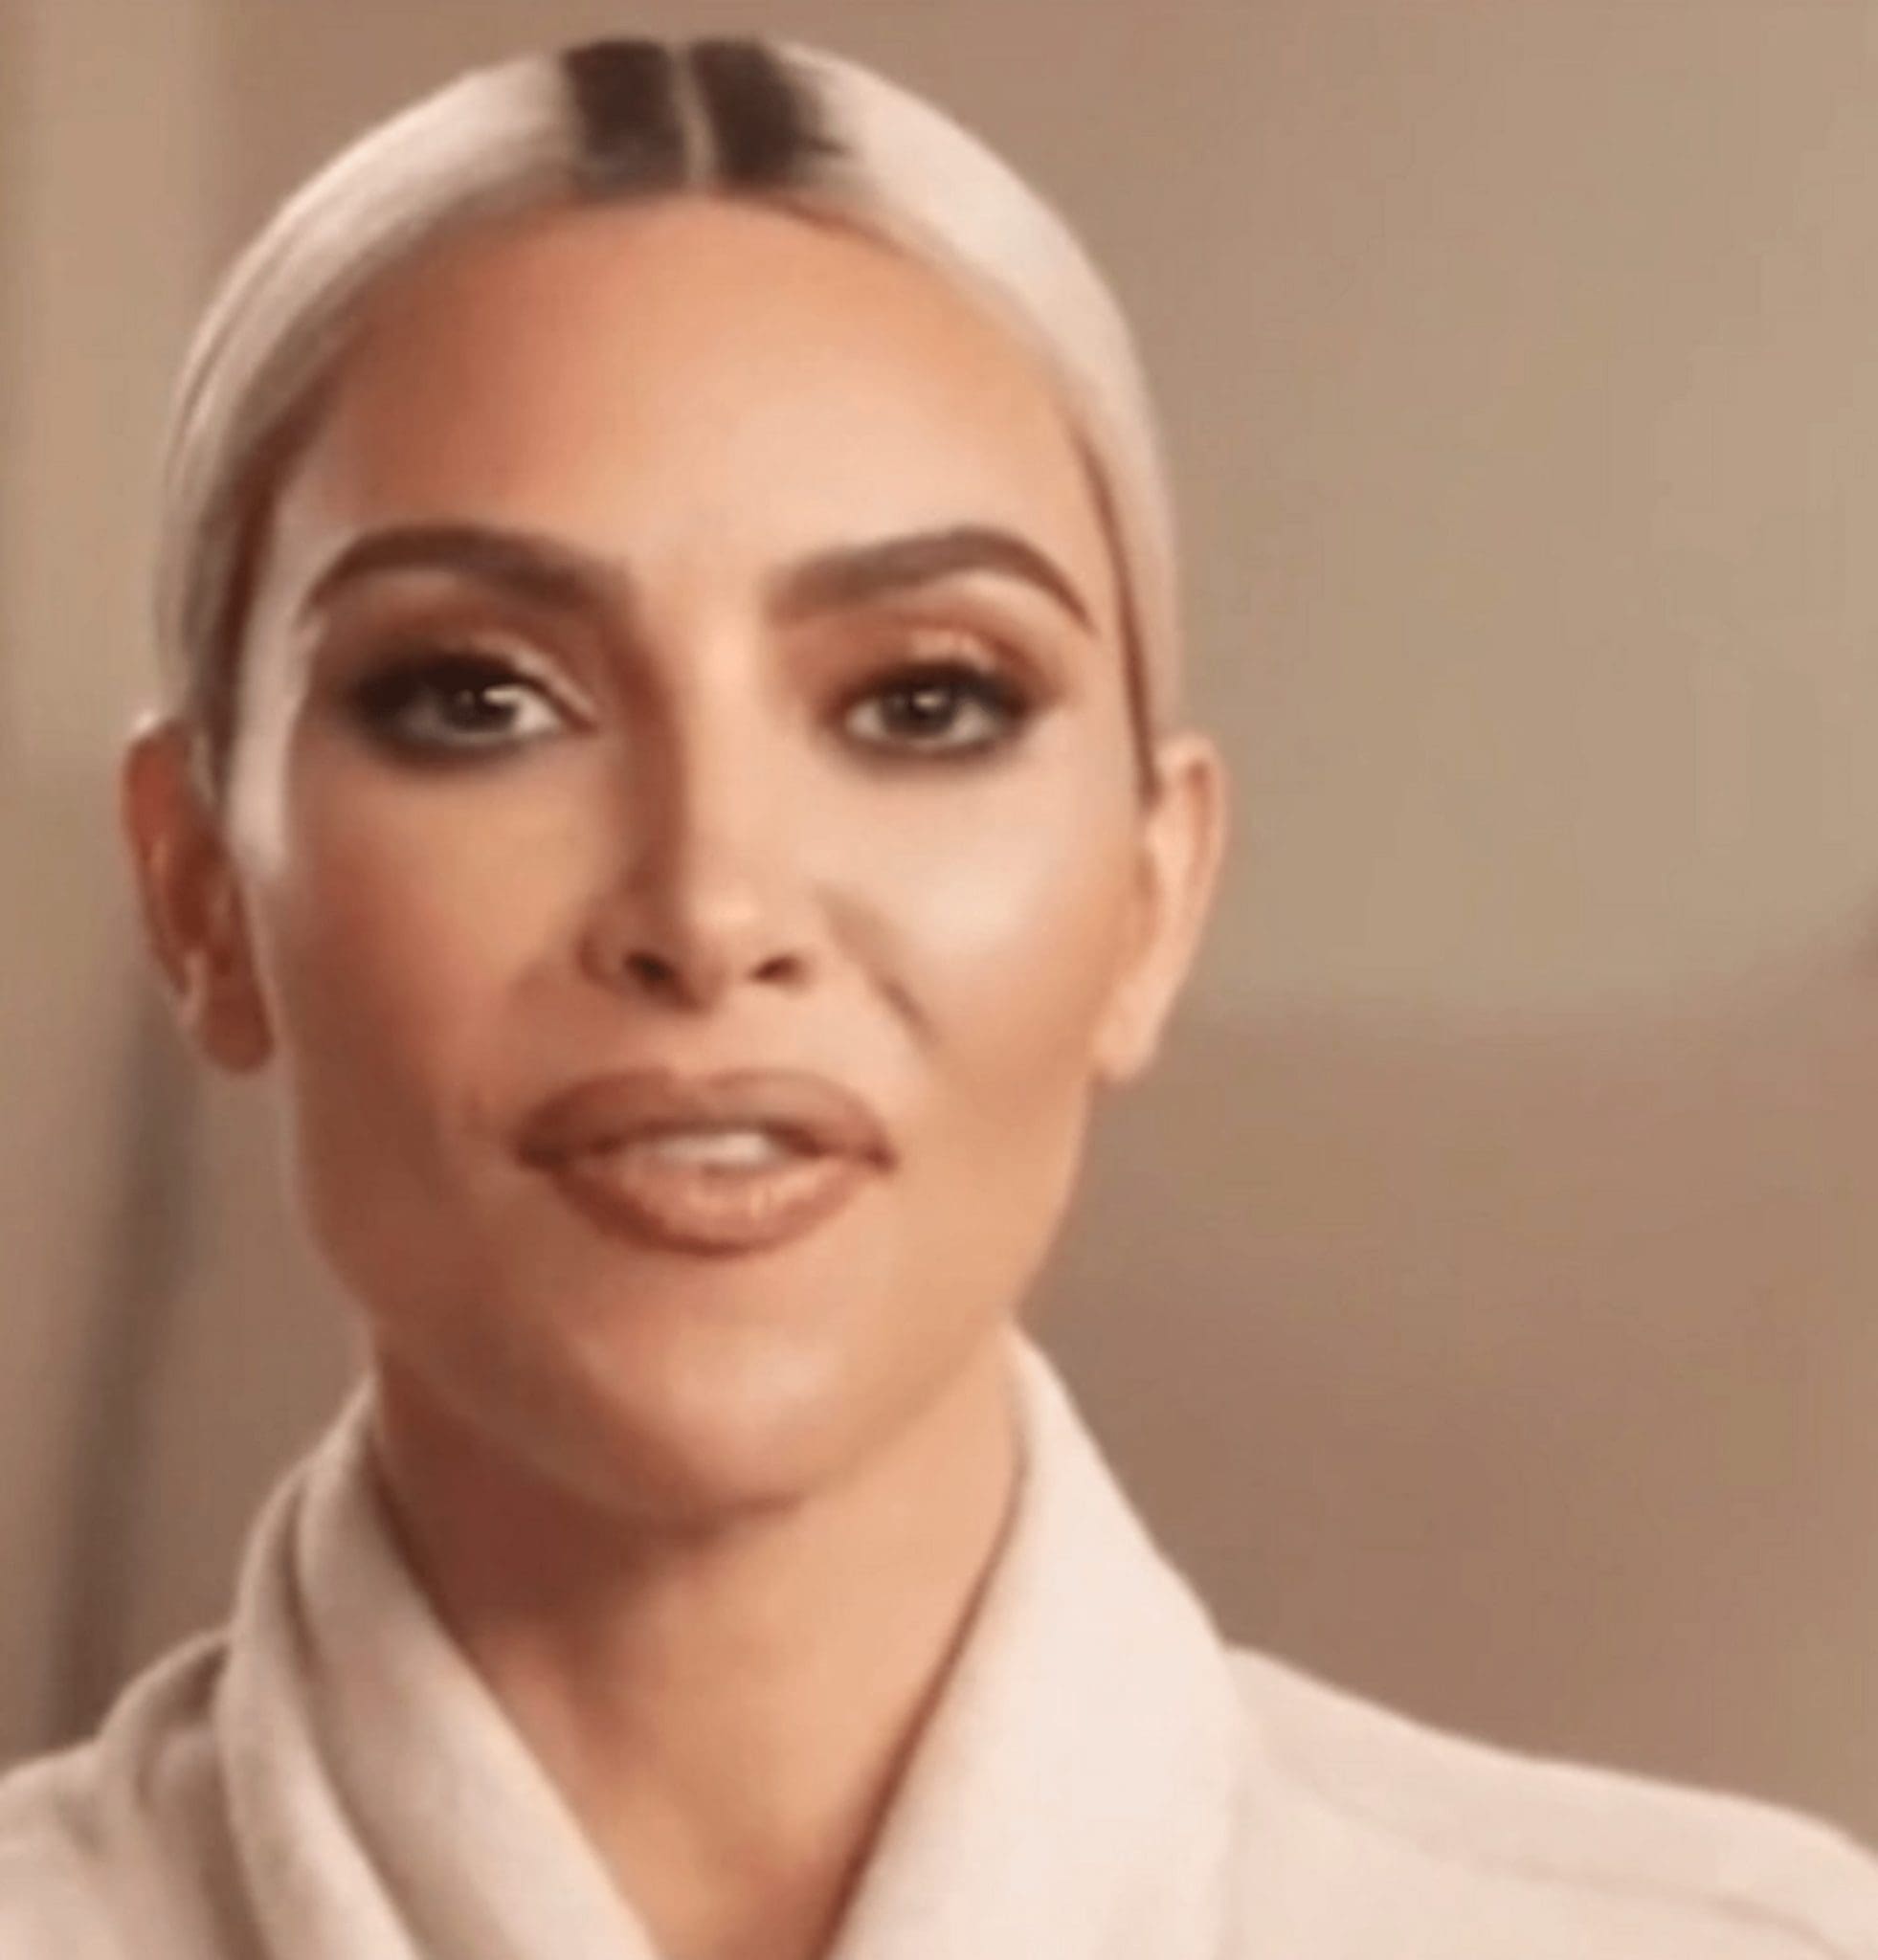 I sleep with makeup: Kim Kardashian shocked fans